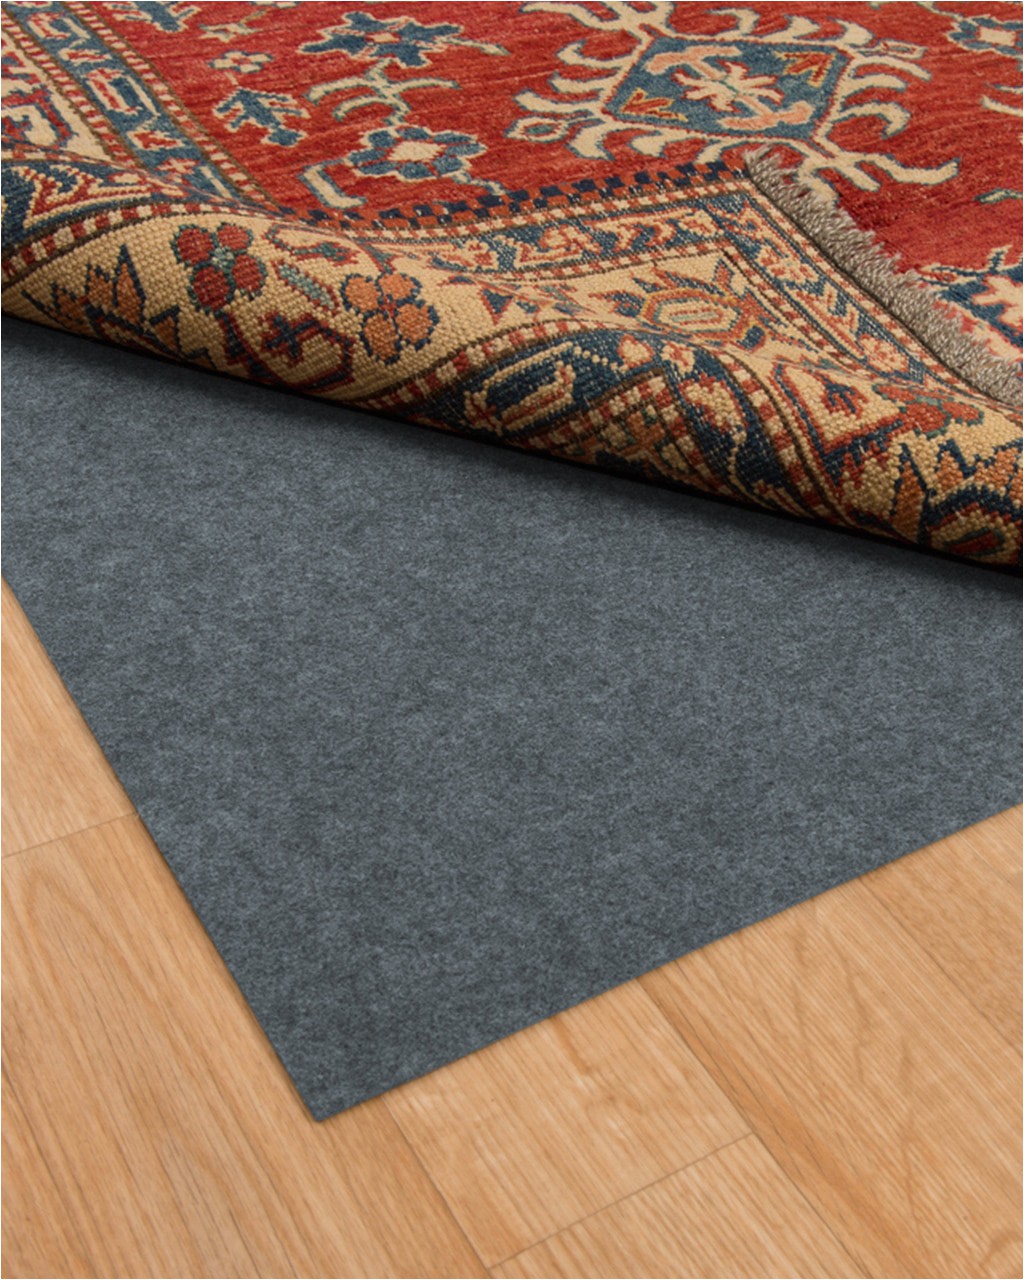 Area Rug Slips On Carpet Luxury Non Slip Felt Rug Pad